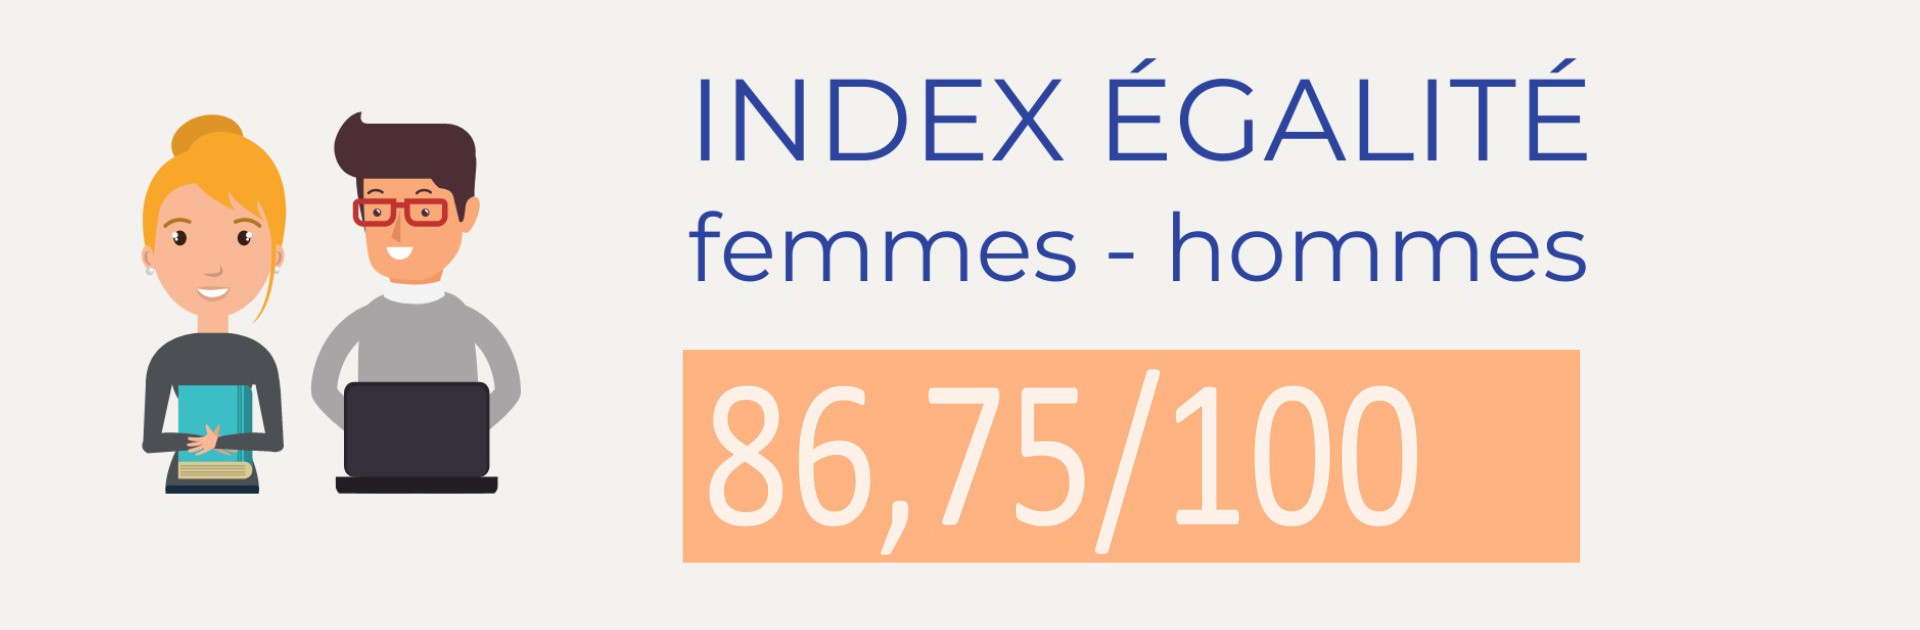 Index égalité